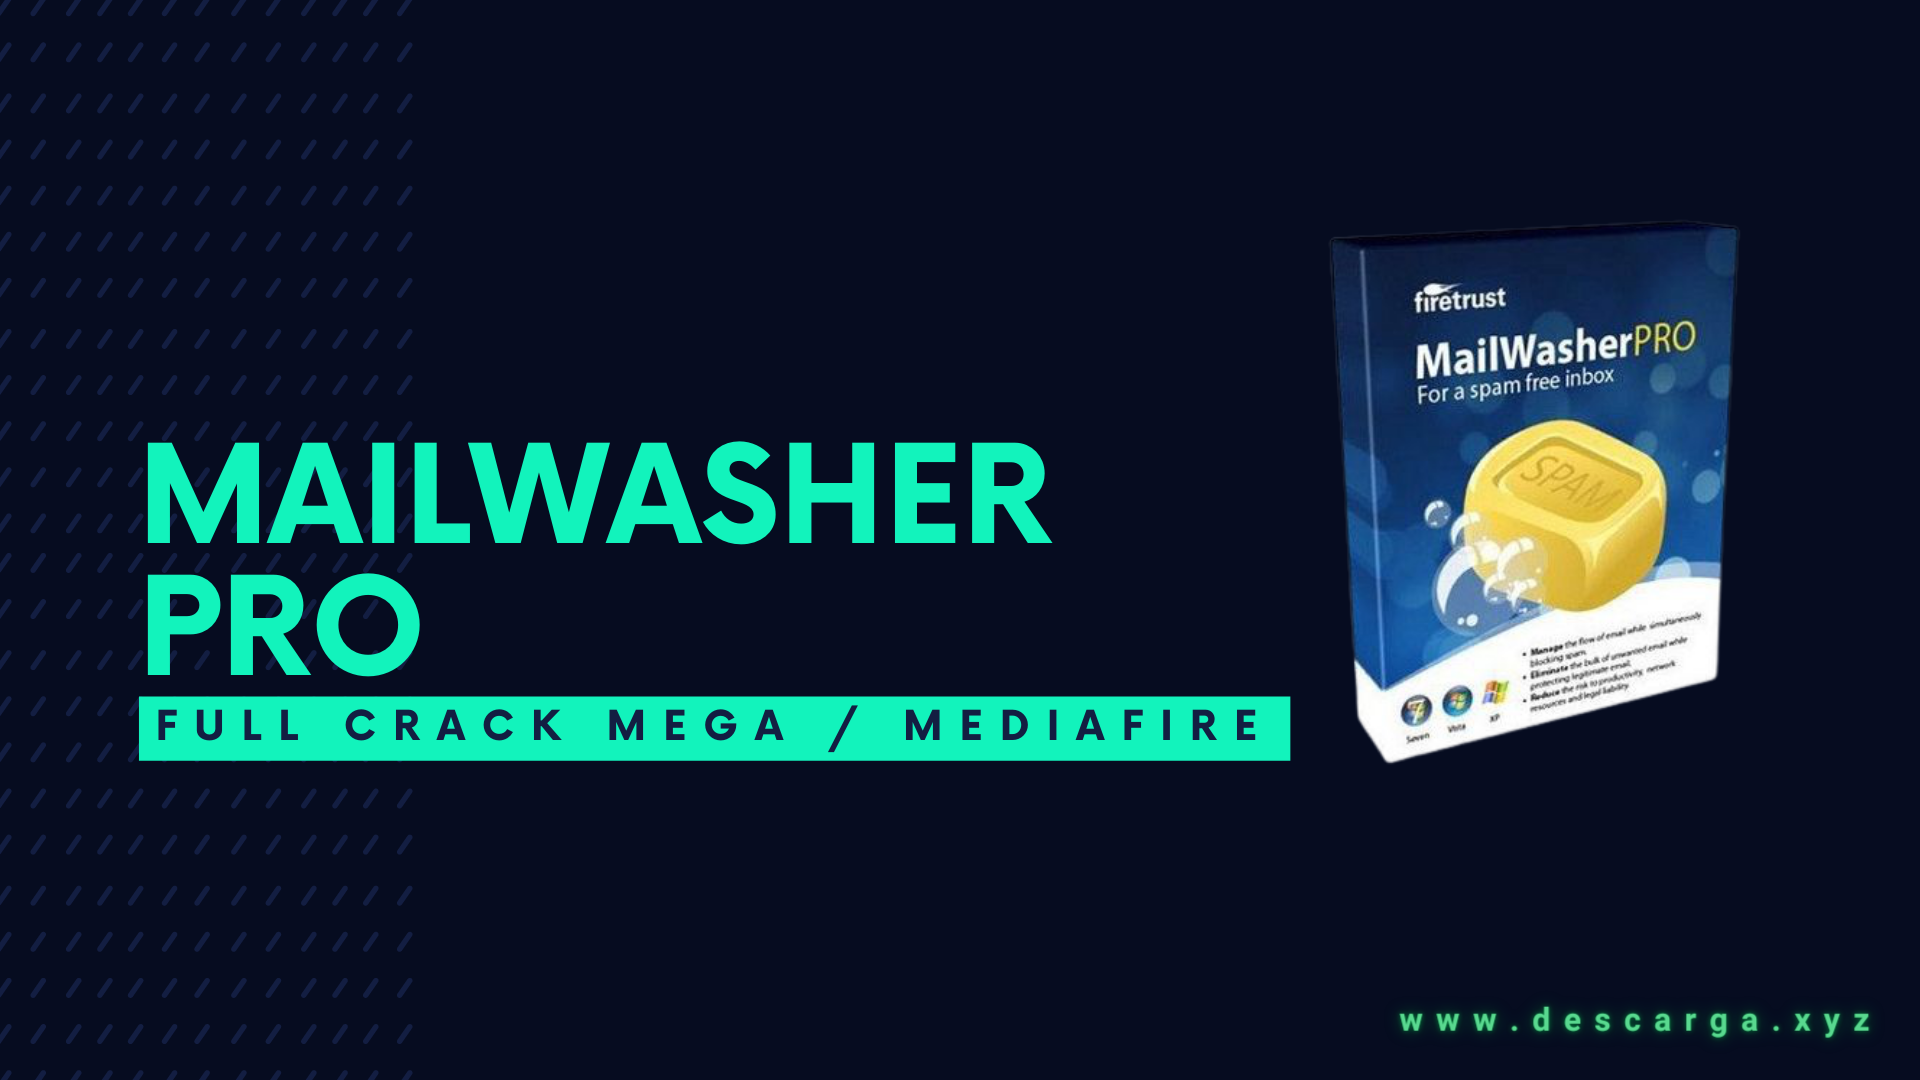 MailWasher Pro Full Crack gratis descarga por MEGA